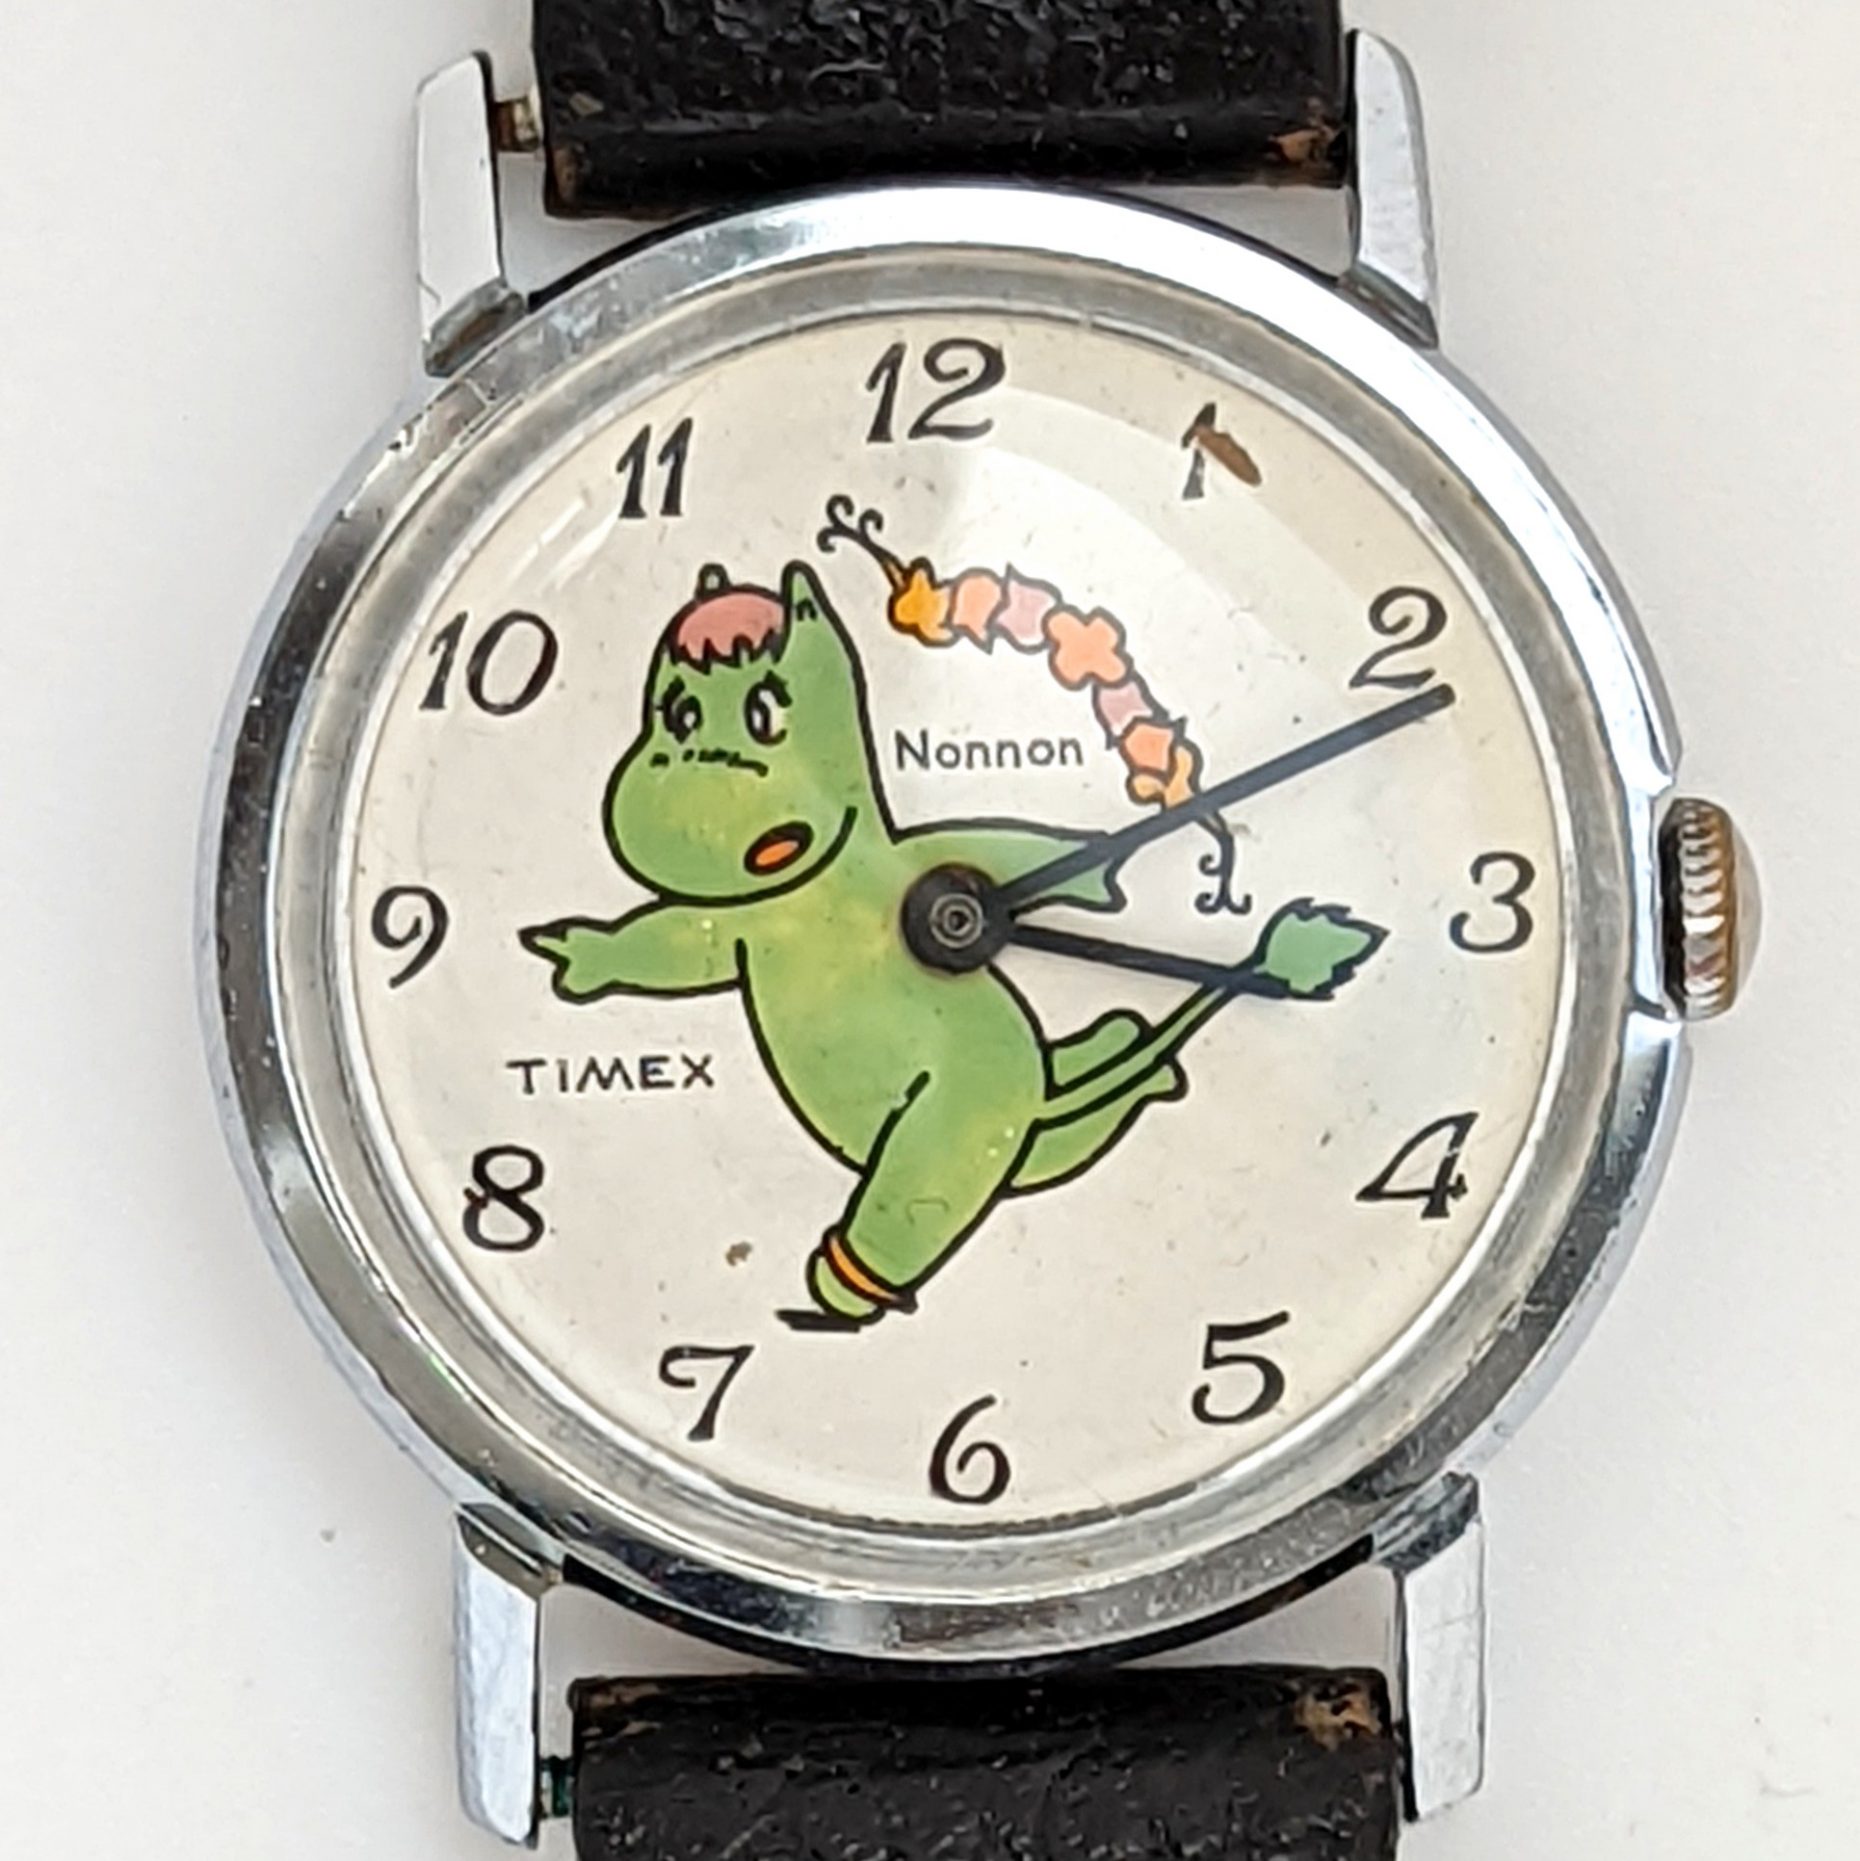 Timex Mercury 39304 02475 [1975] Nonnon Moomin Character Watch